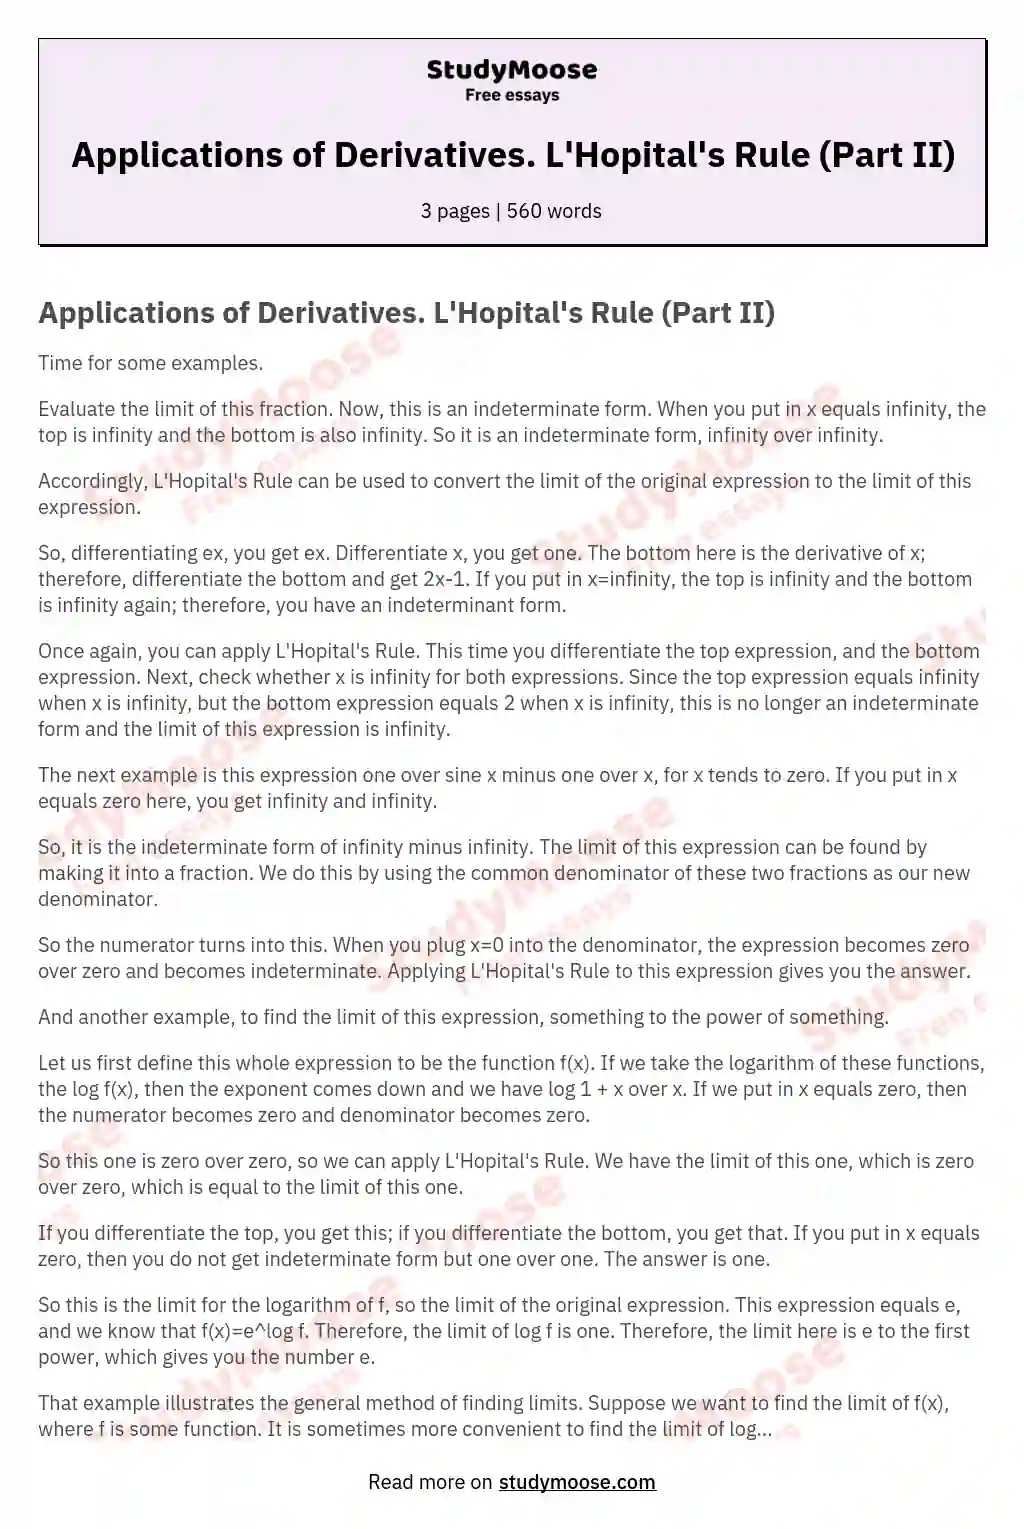 Applications of Derivatives. L'Hopital's Rule (Part II) essay